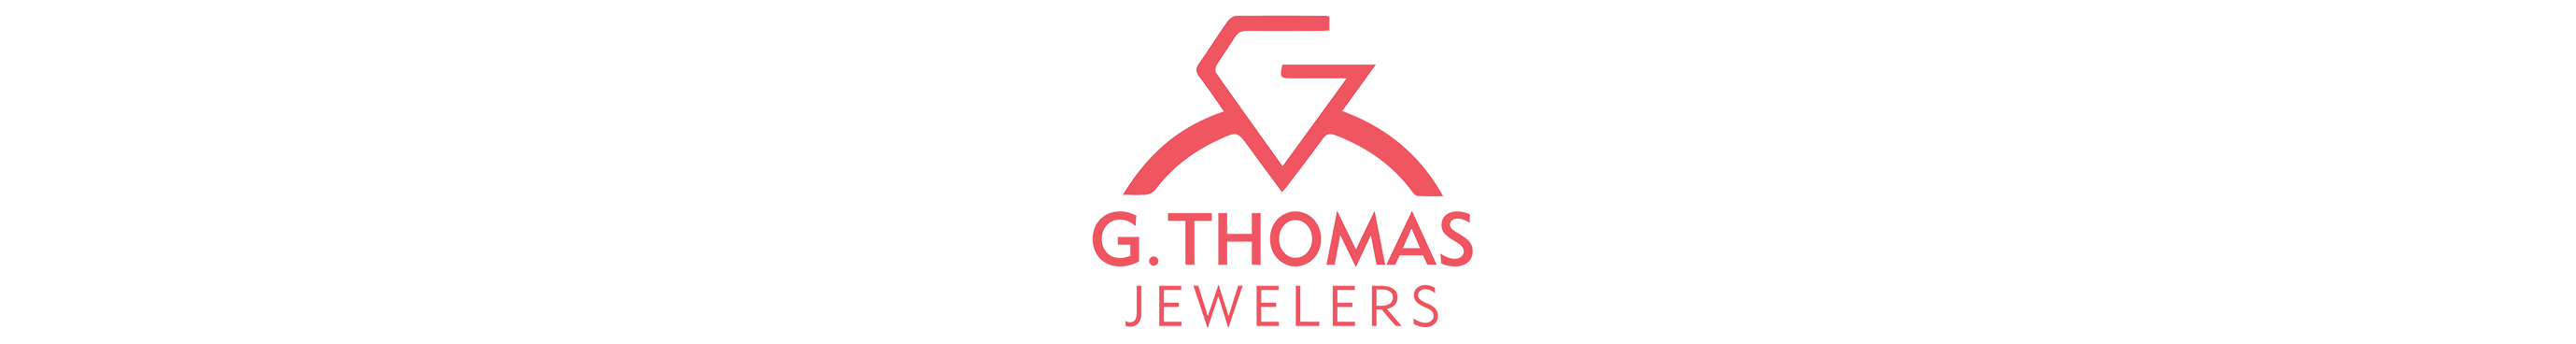 G Thomas Jewelers Logo